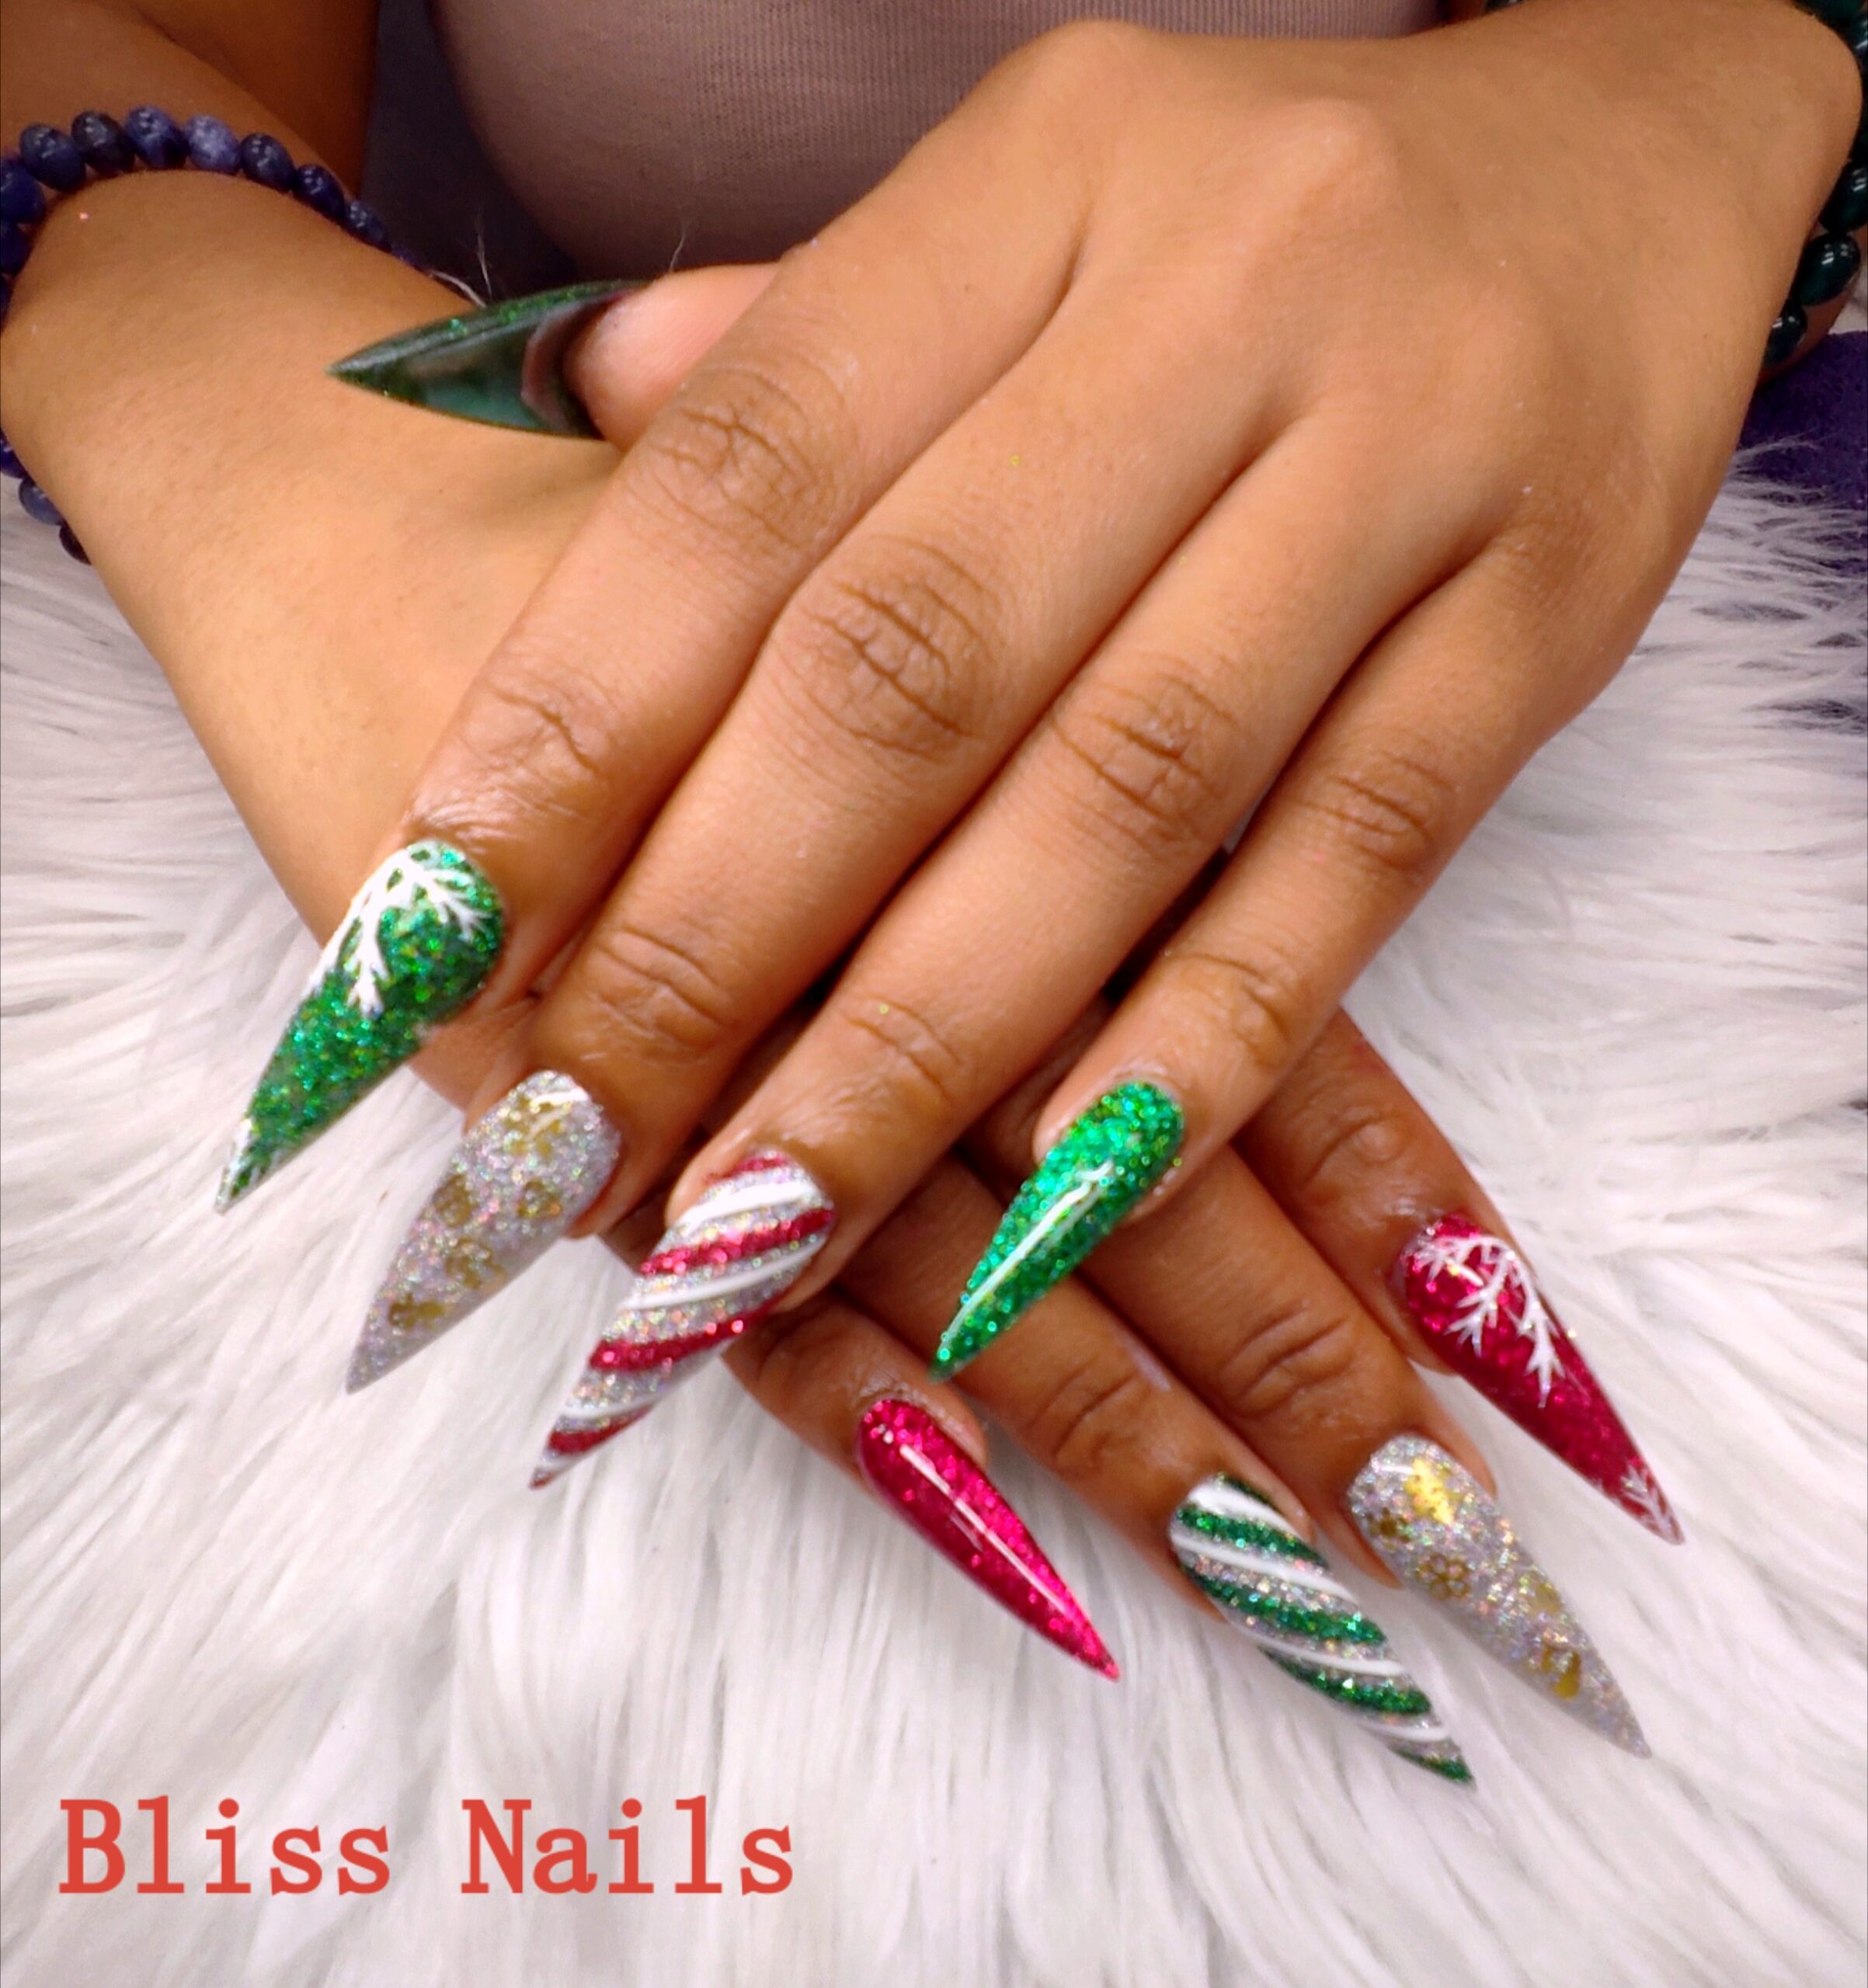 Bliss Nail Salon | Nail salon near me New Britain, CT